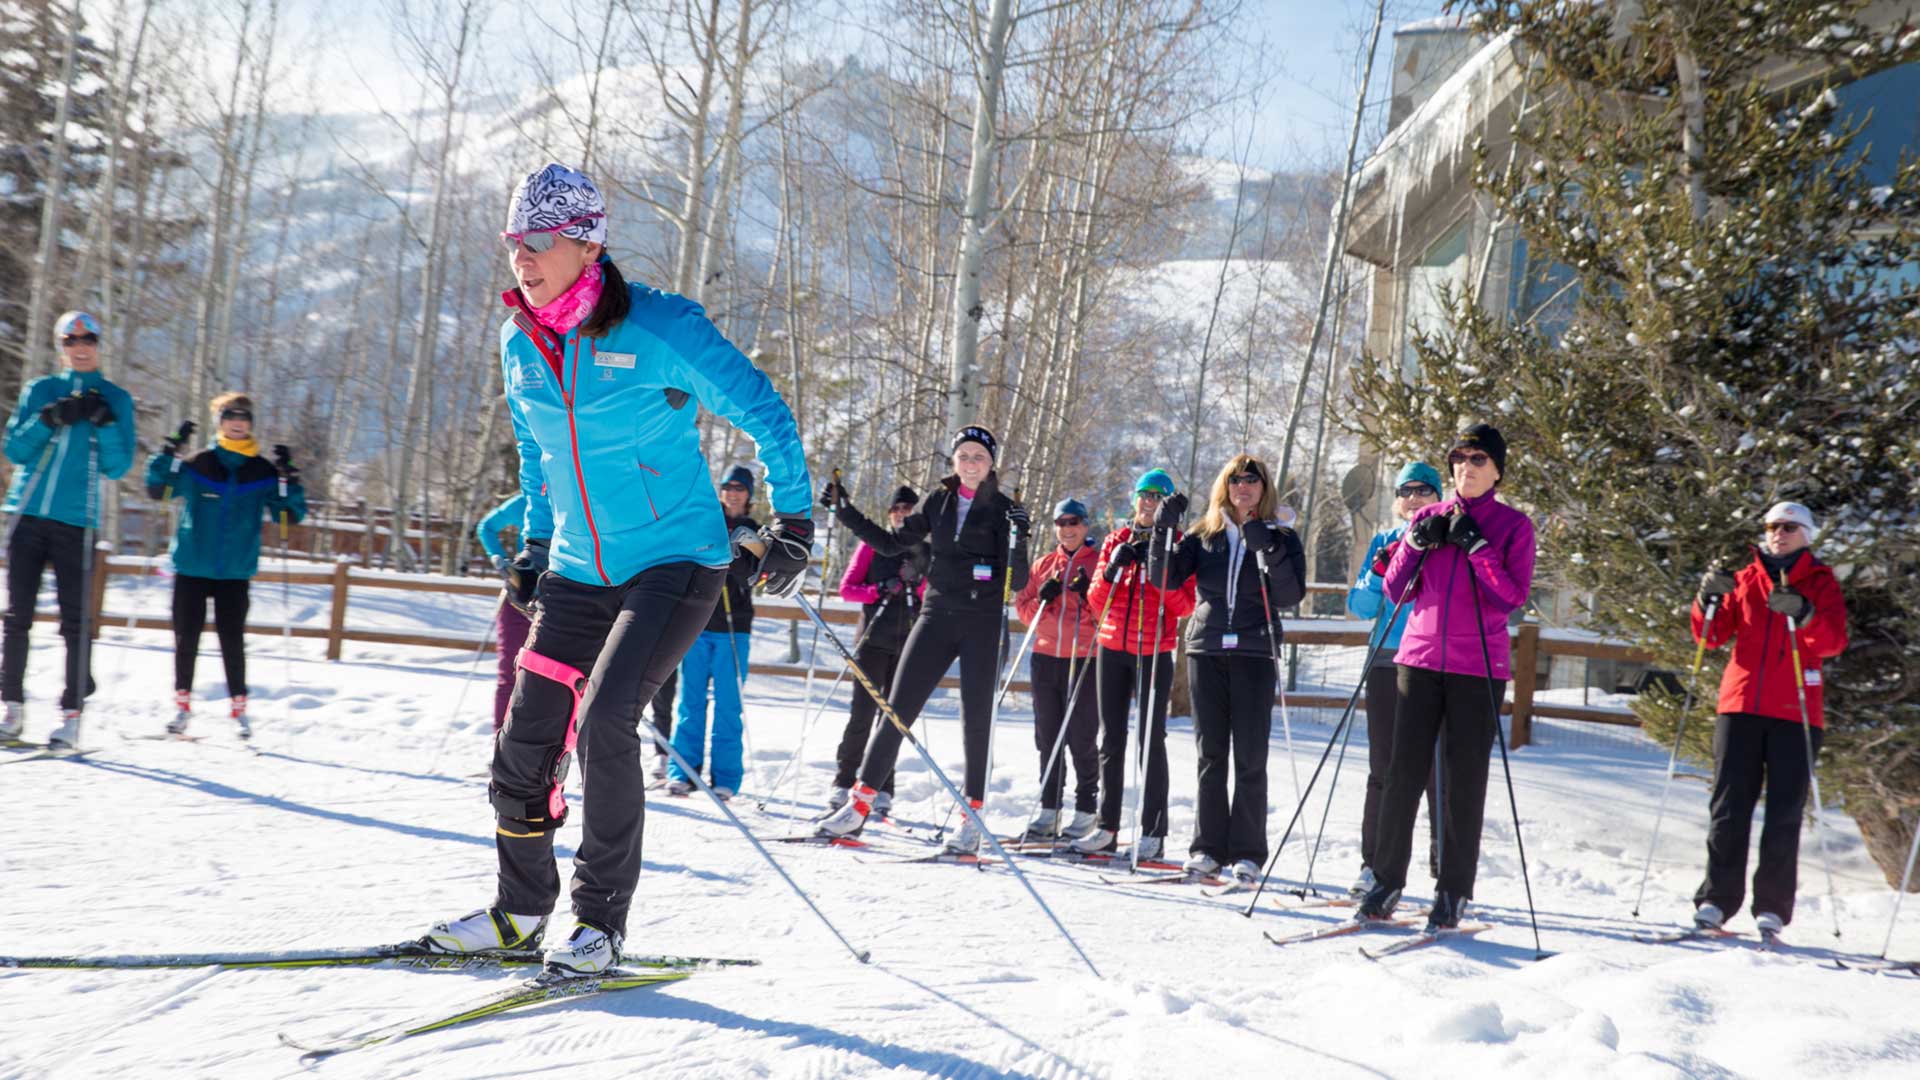 Cross-country ski clothing: Nordic ski clothing, nordic ski wear